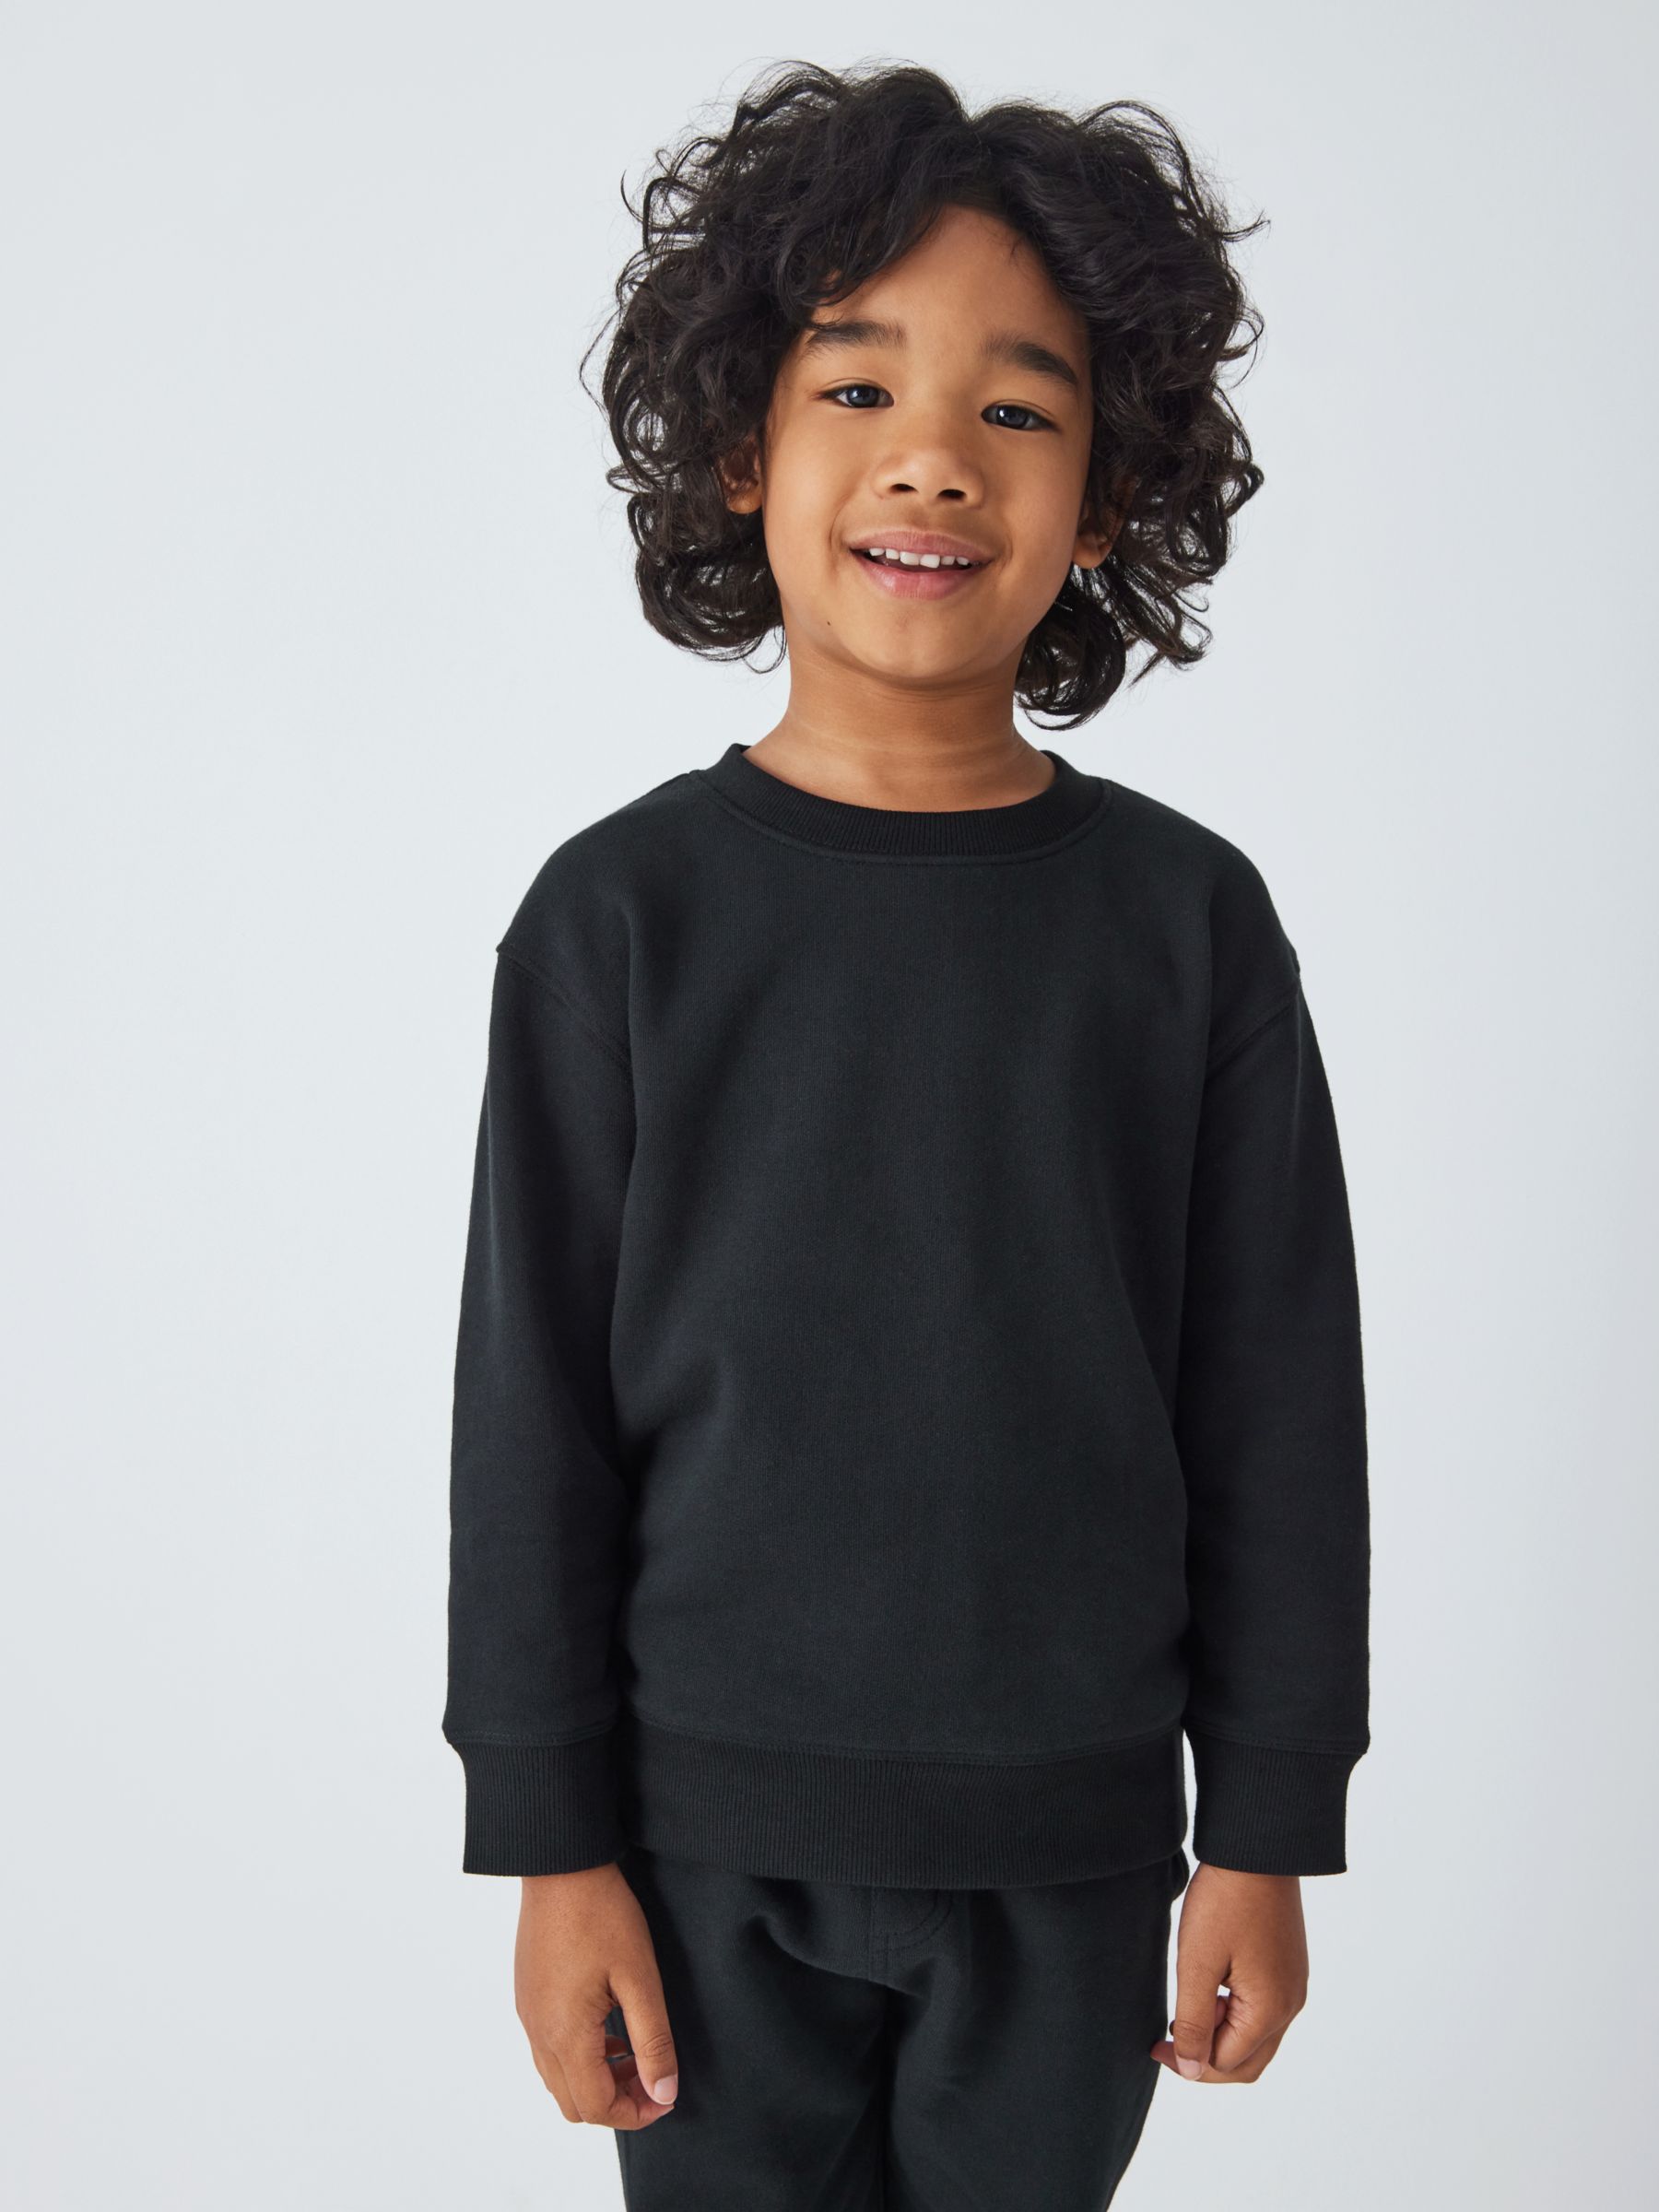 John Lewis Kids' Sweatshirt, Black, 3 years